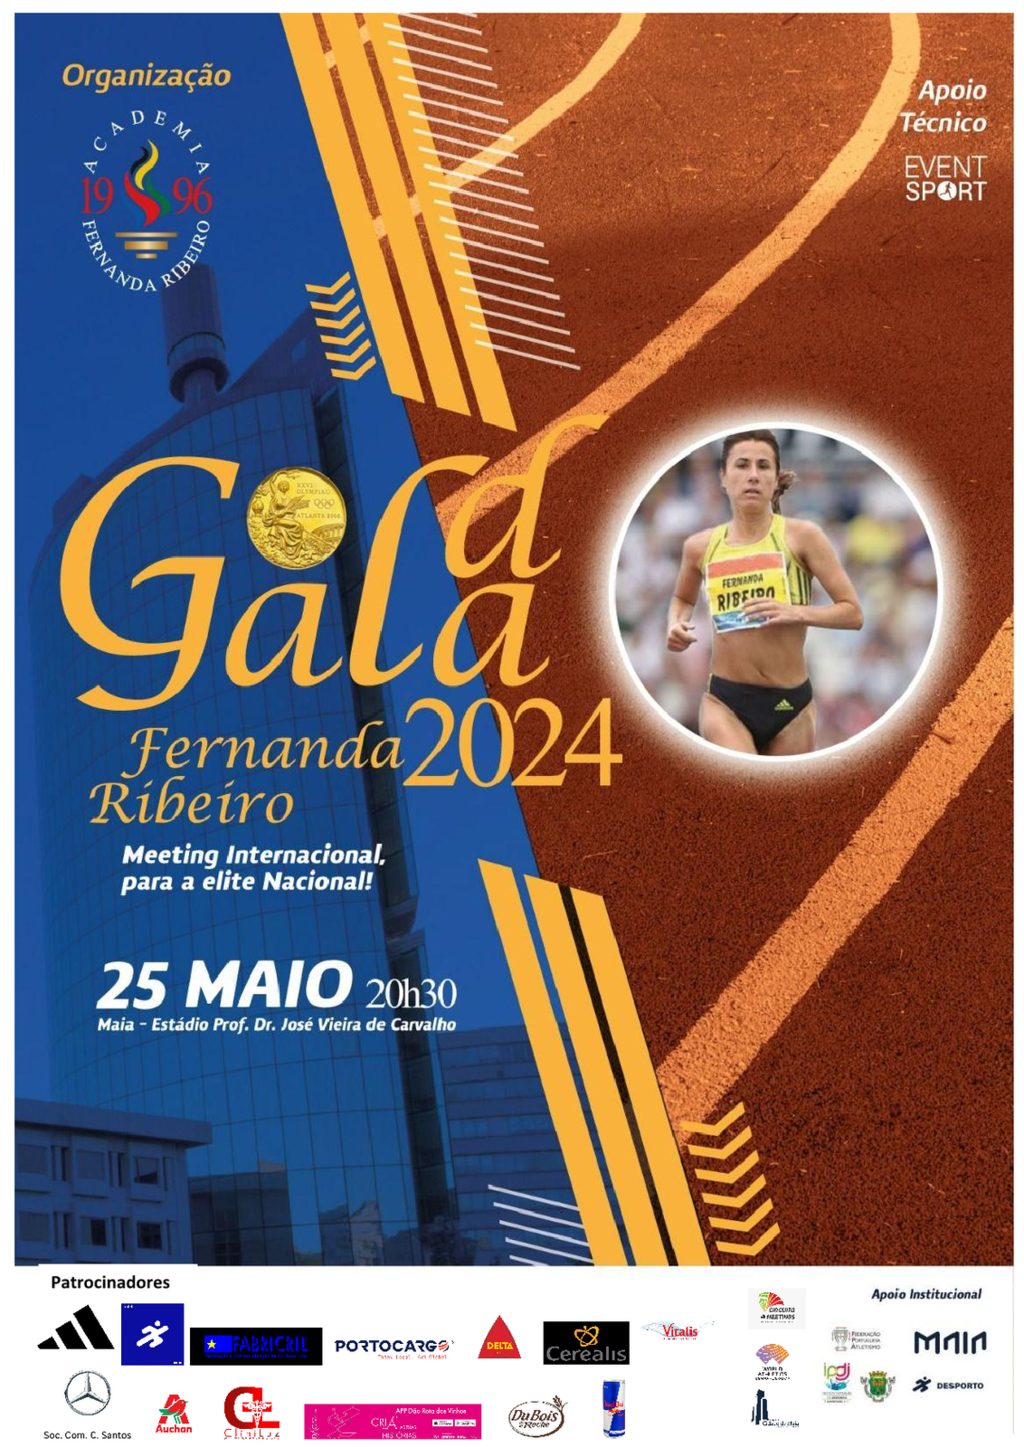 Gold Gala Fernanda Ribeiro 2024